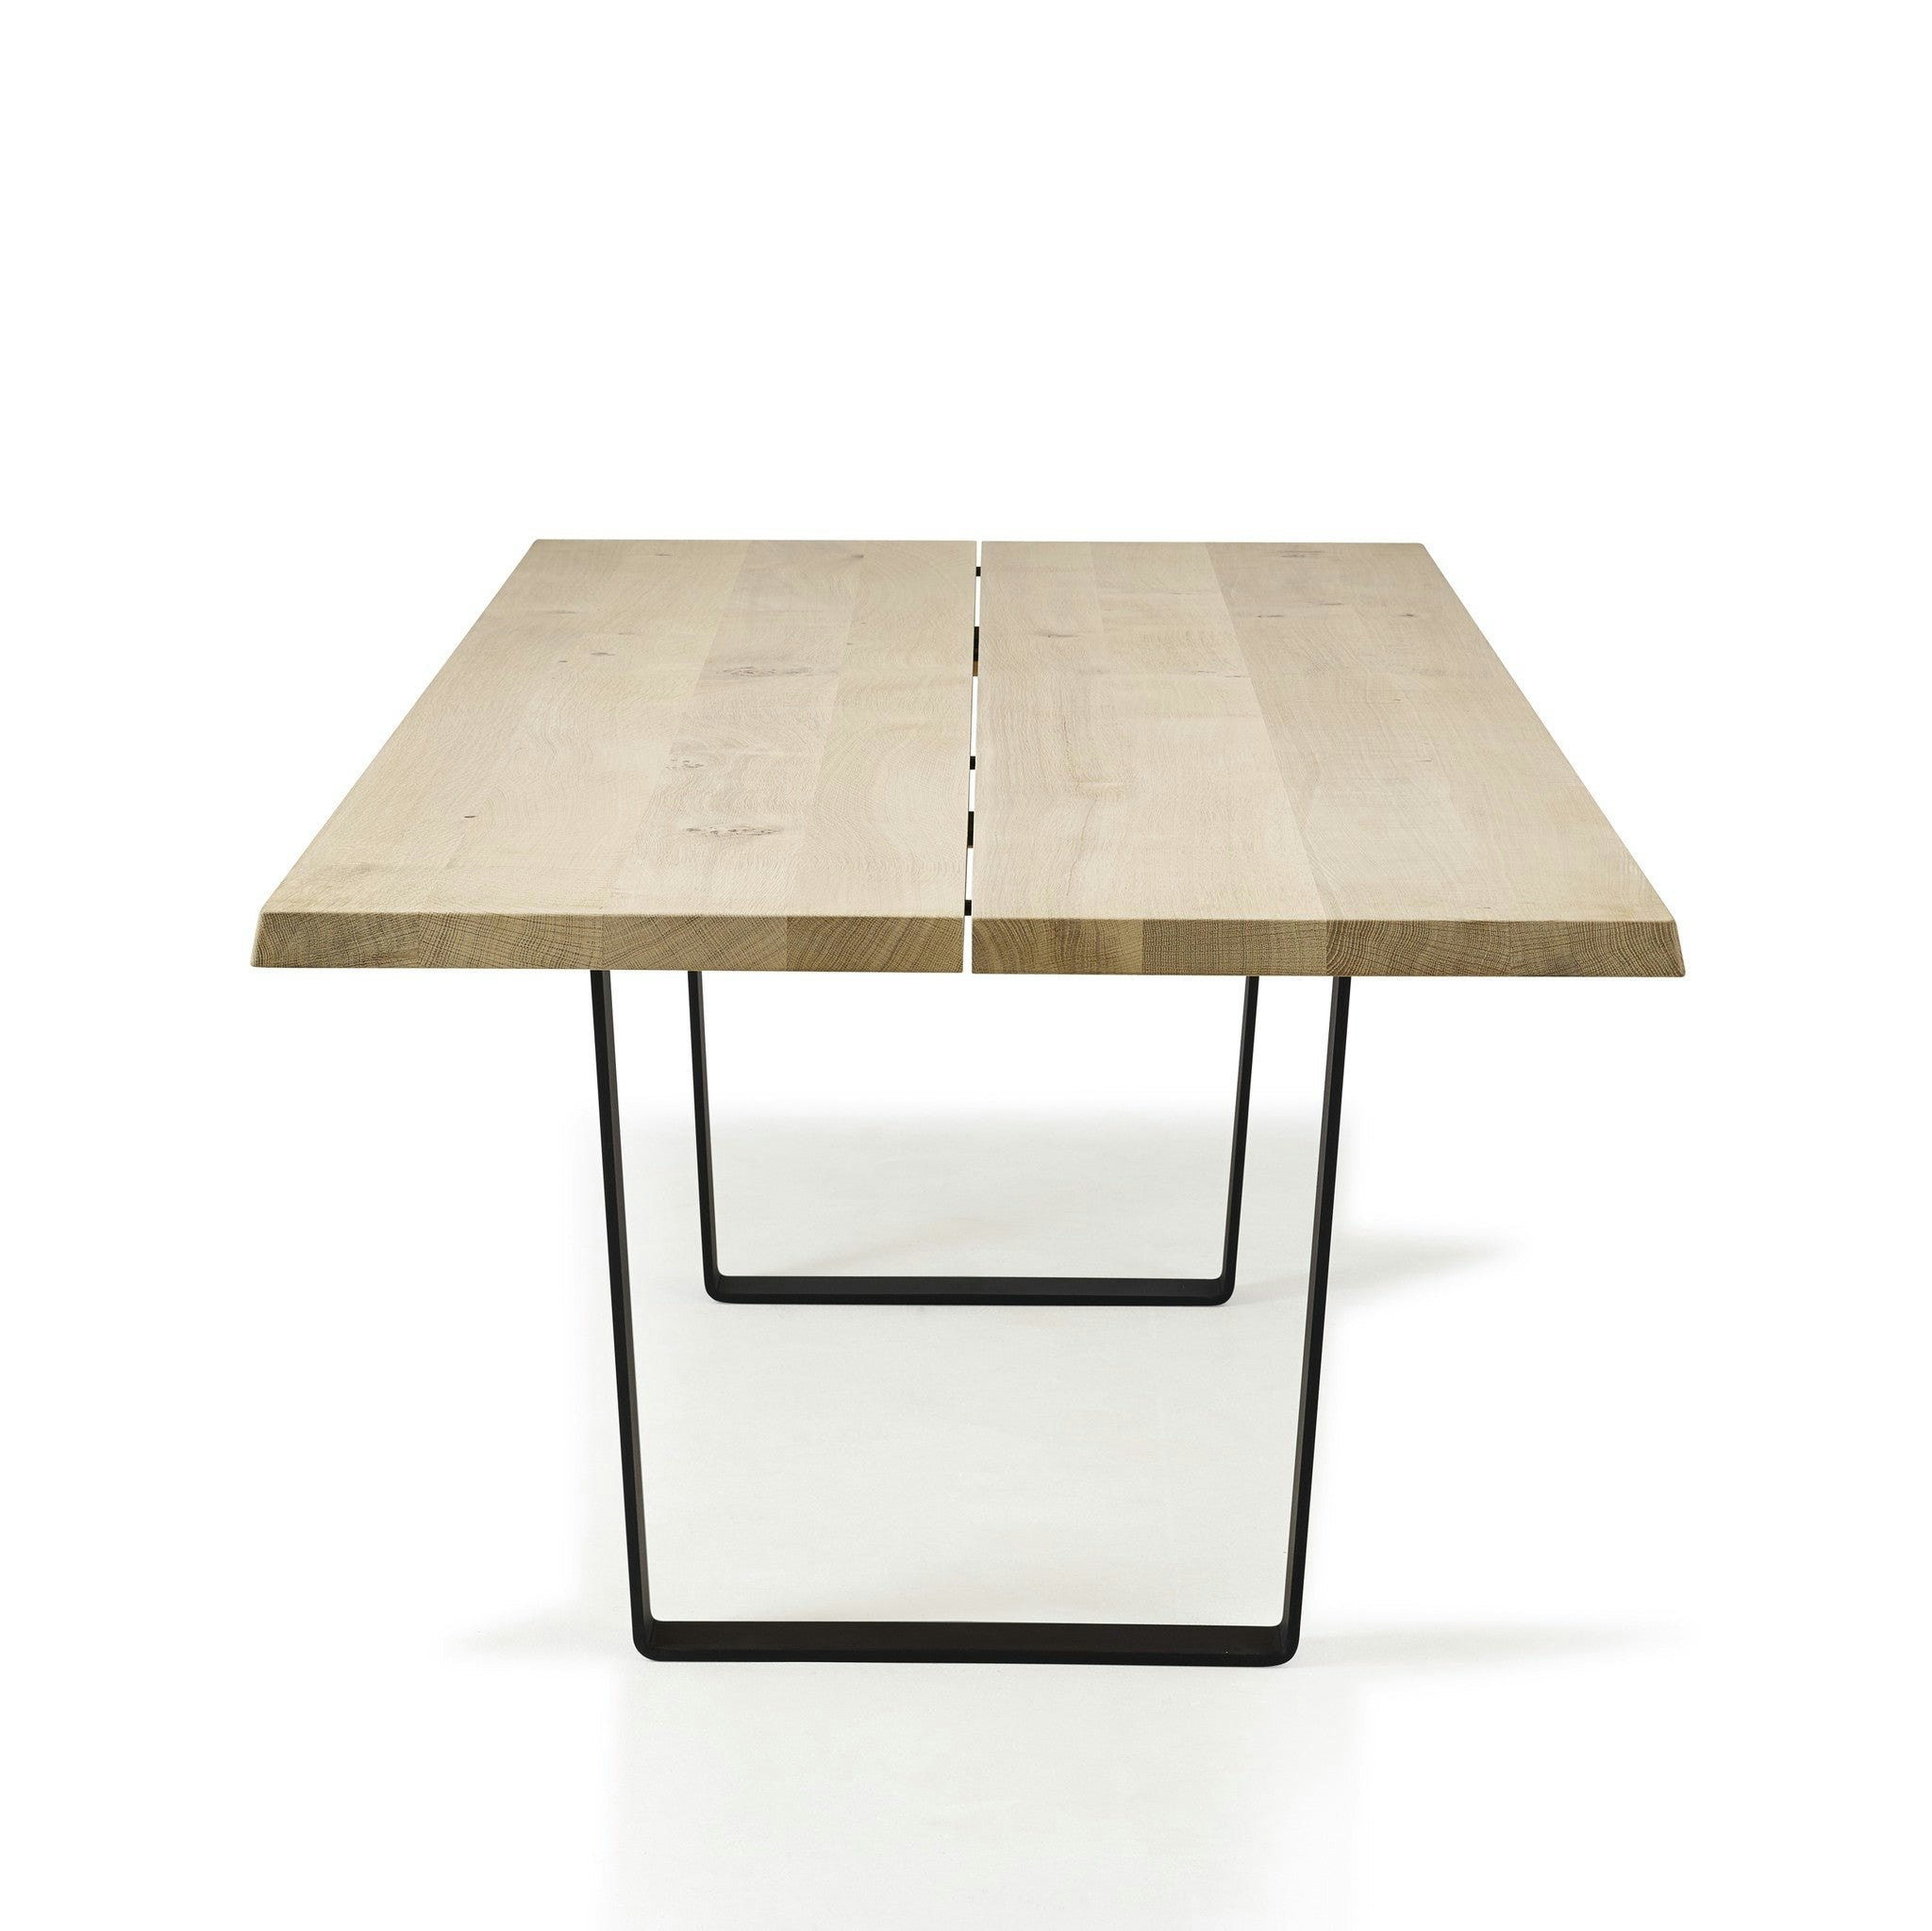 Lowlight Table by DK3